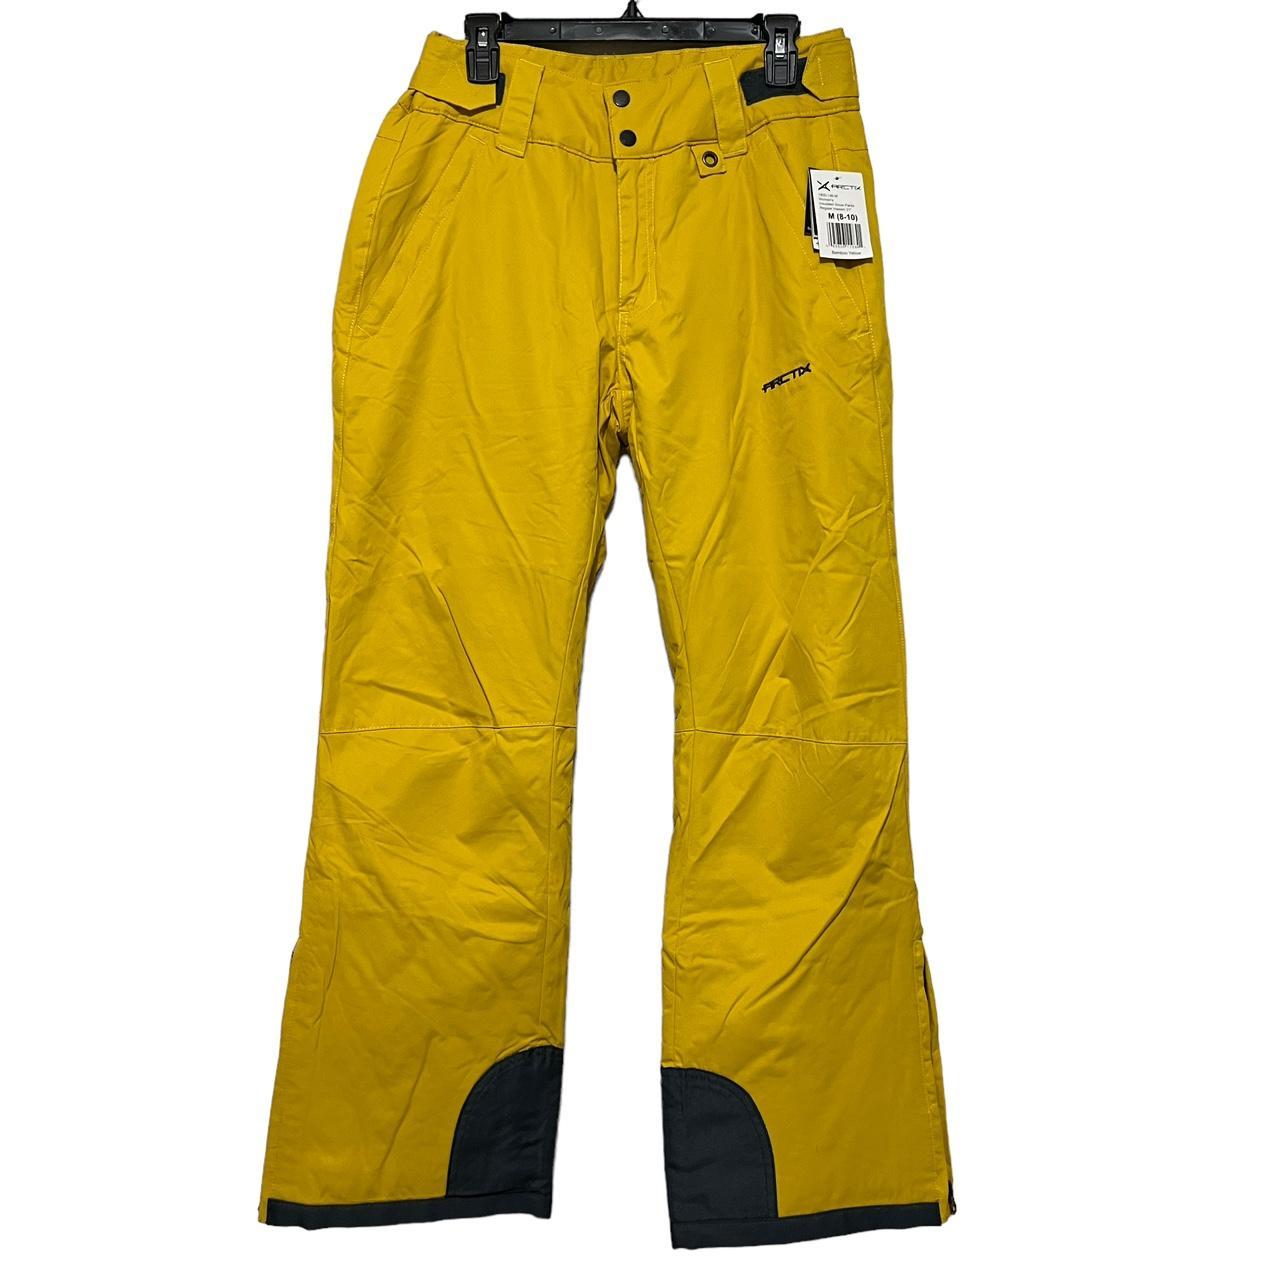 Yellow Snow Pants, Brand: Arctix, Size: Medium